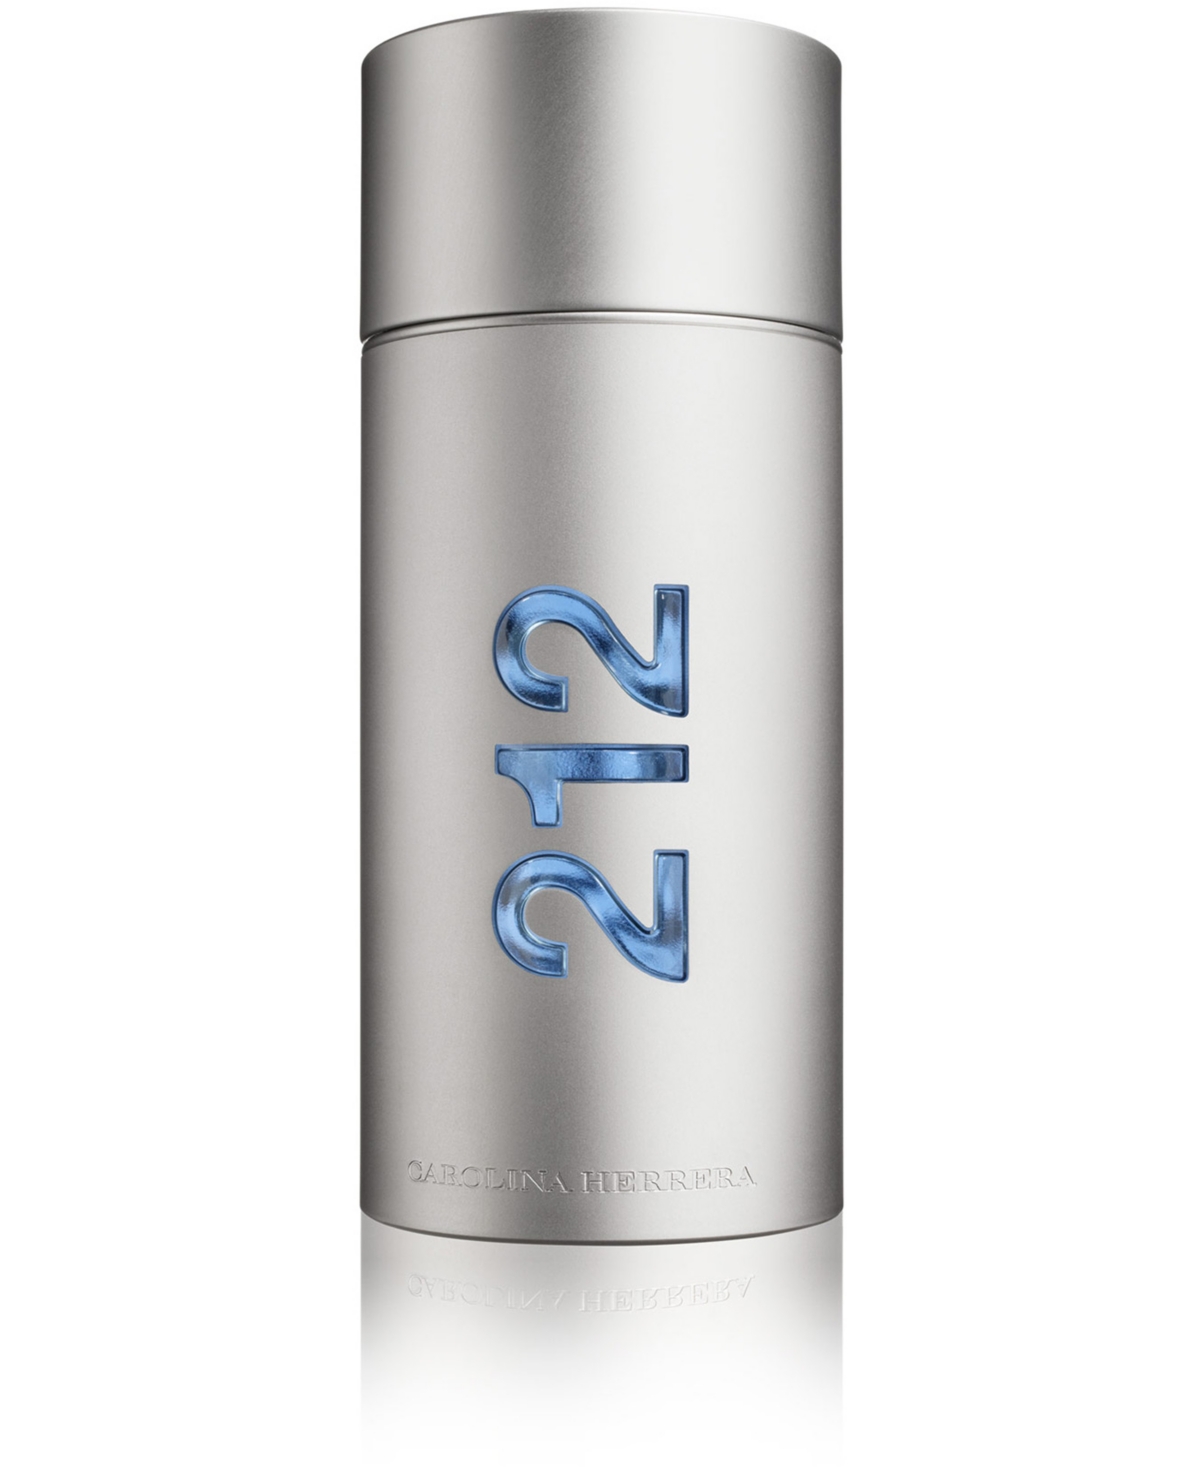 212 Nyc Men's Eau de Toilette Spray, 6.8 oz., Created for Macy's!